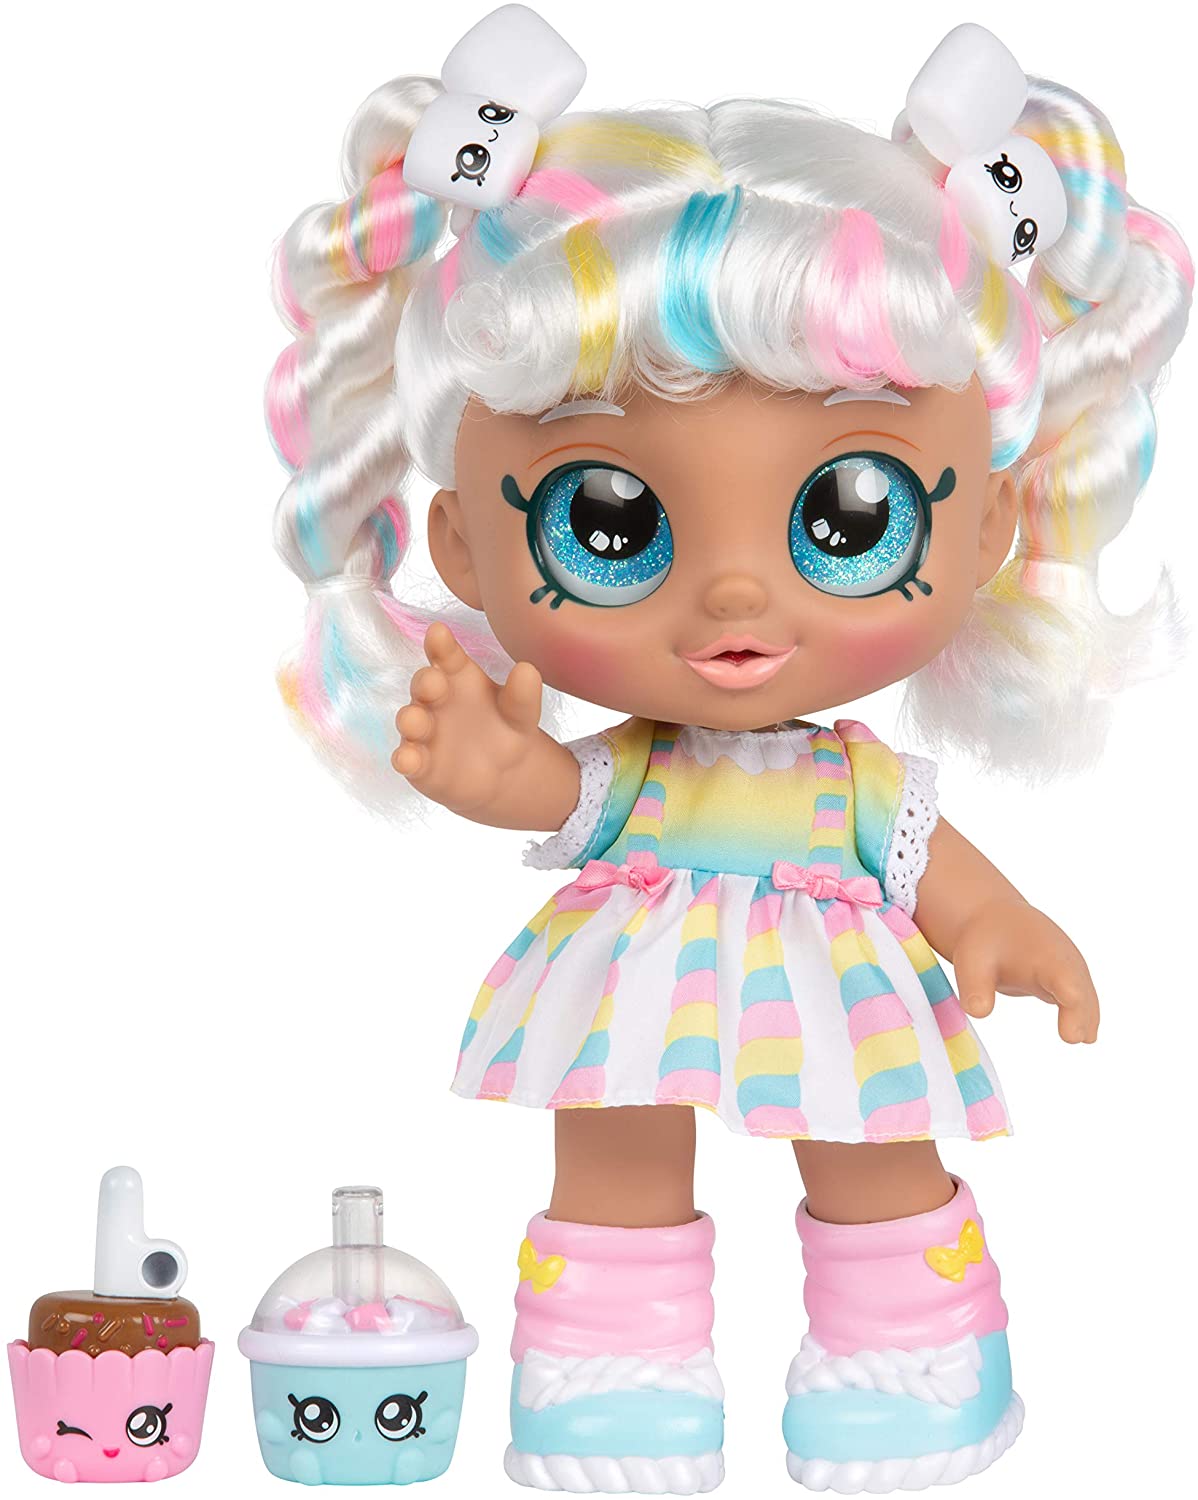 Kindi Kids Marsha Mello Cake Pop Doll Toy For Girls